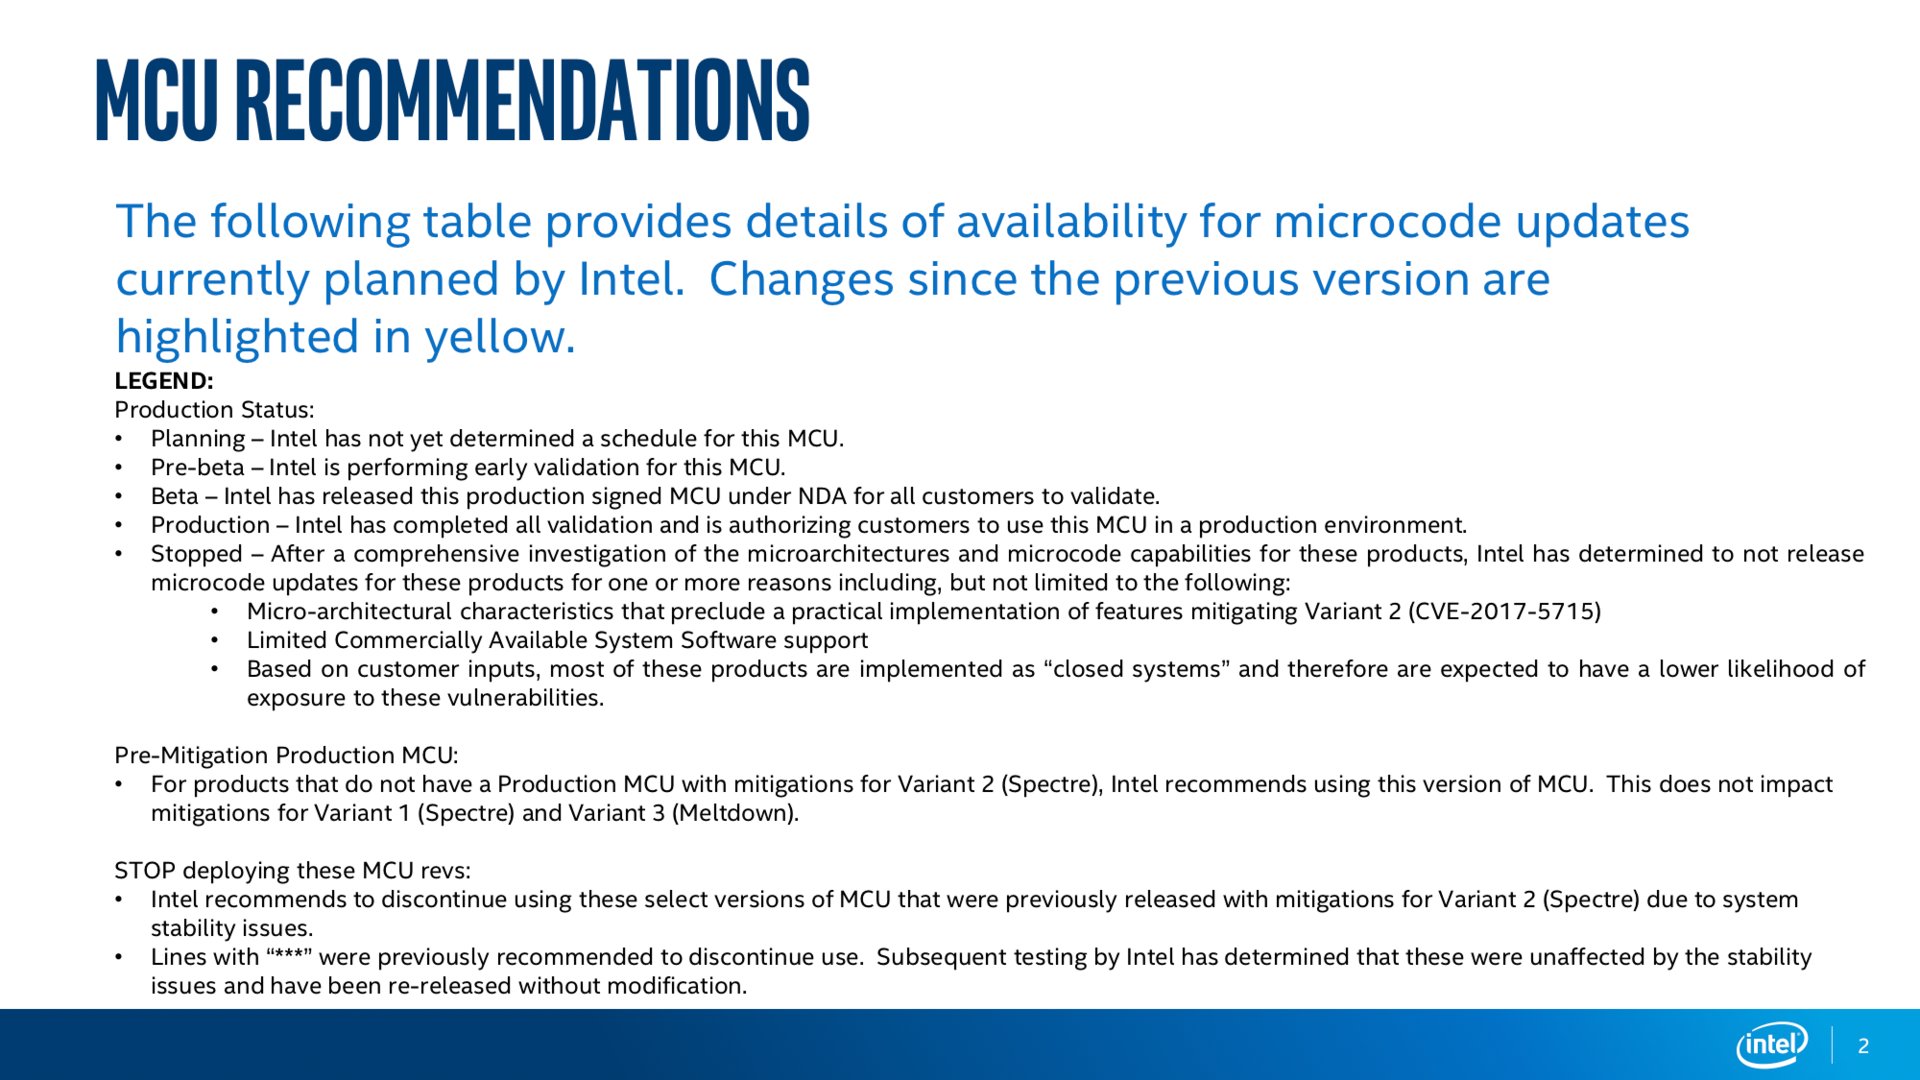 Intel Microcode Guidance Stand April 2018